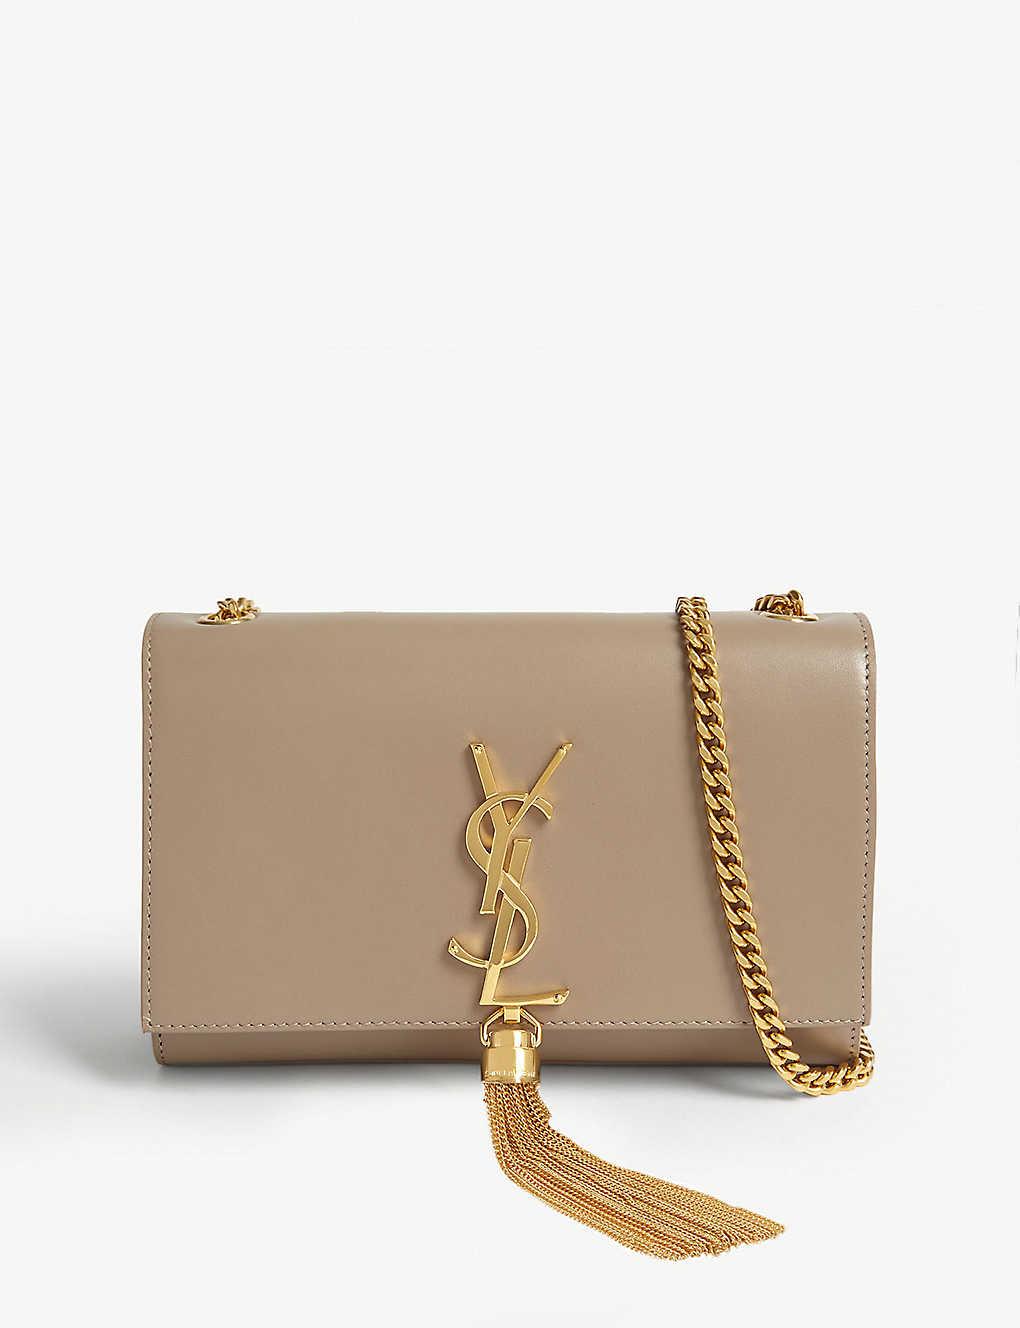 Saint Laurent Kate Tassel Monogram Small Leather Shoulder Bag | Lyst